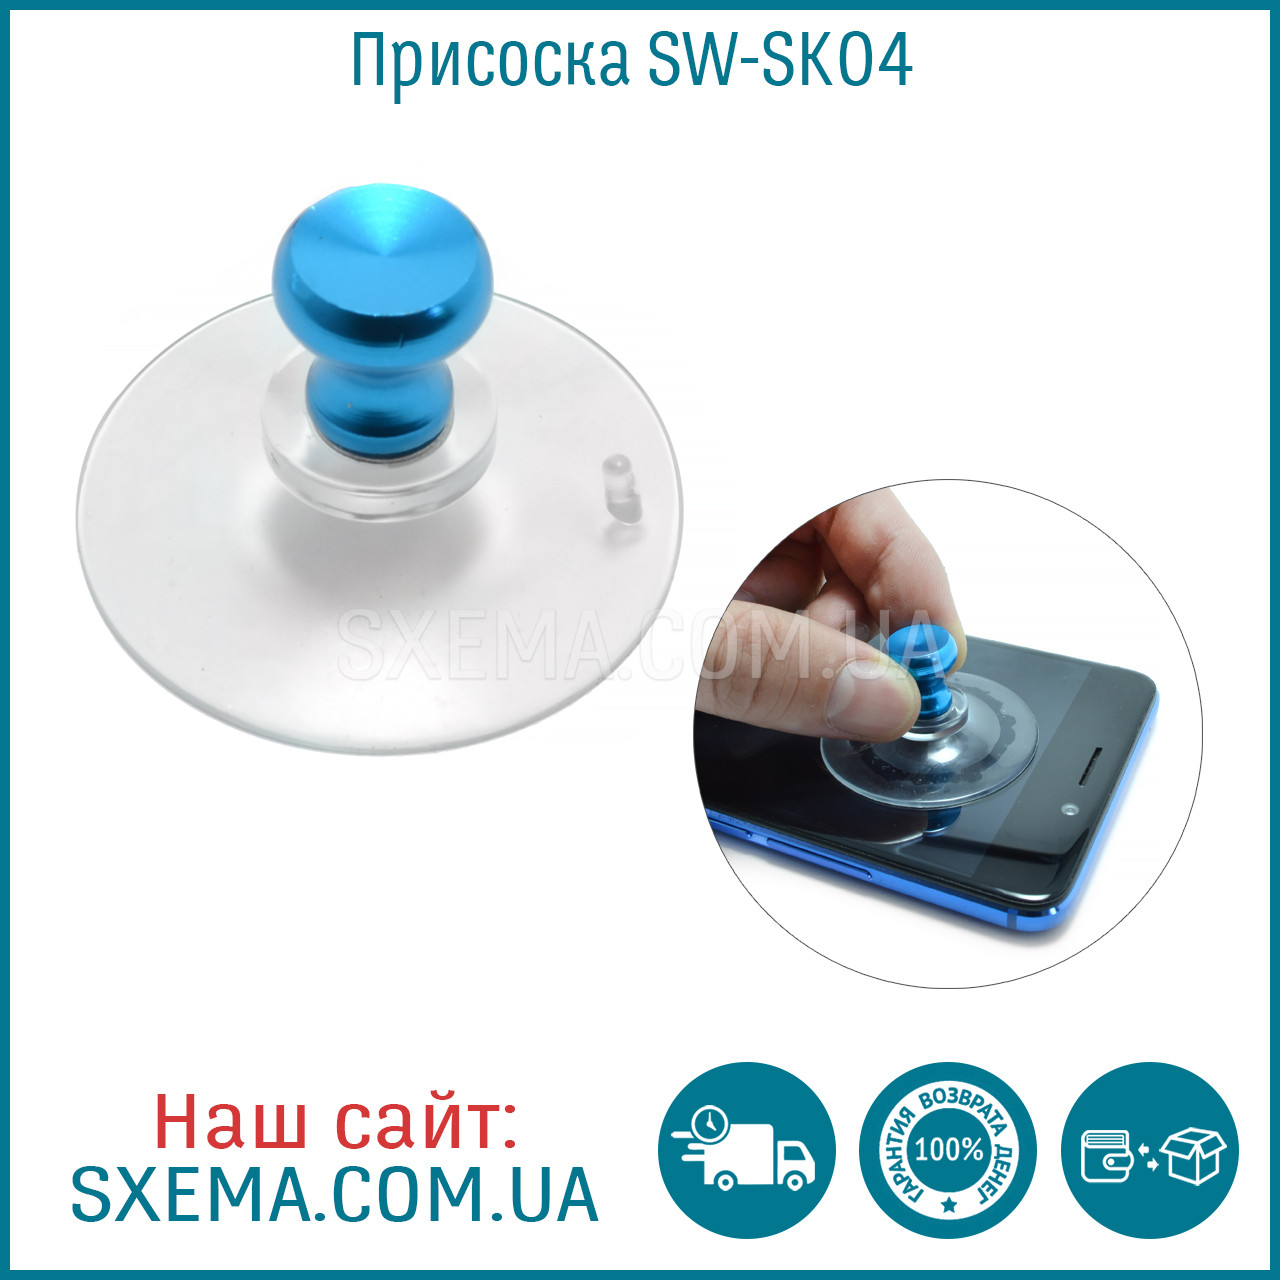 Присосок для зняття дисплея SW-SK04 43 мм